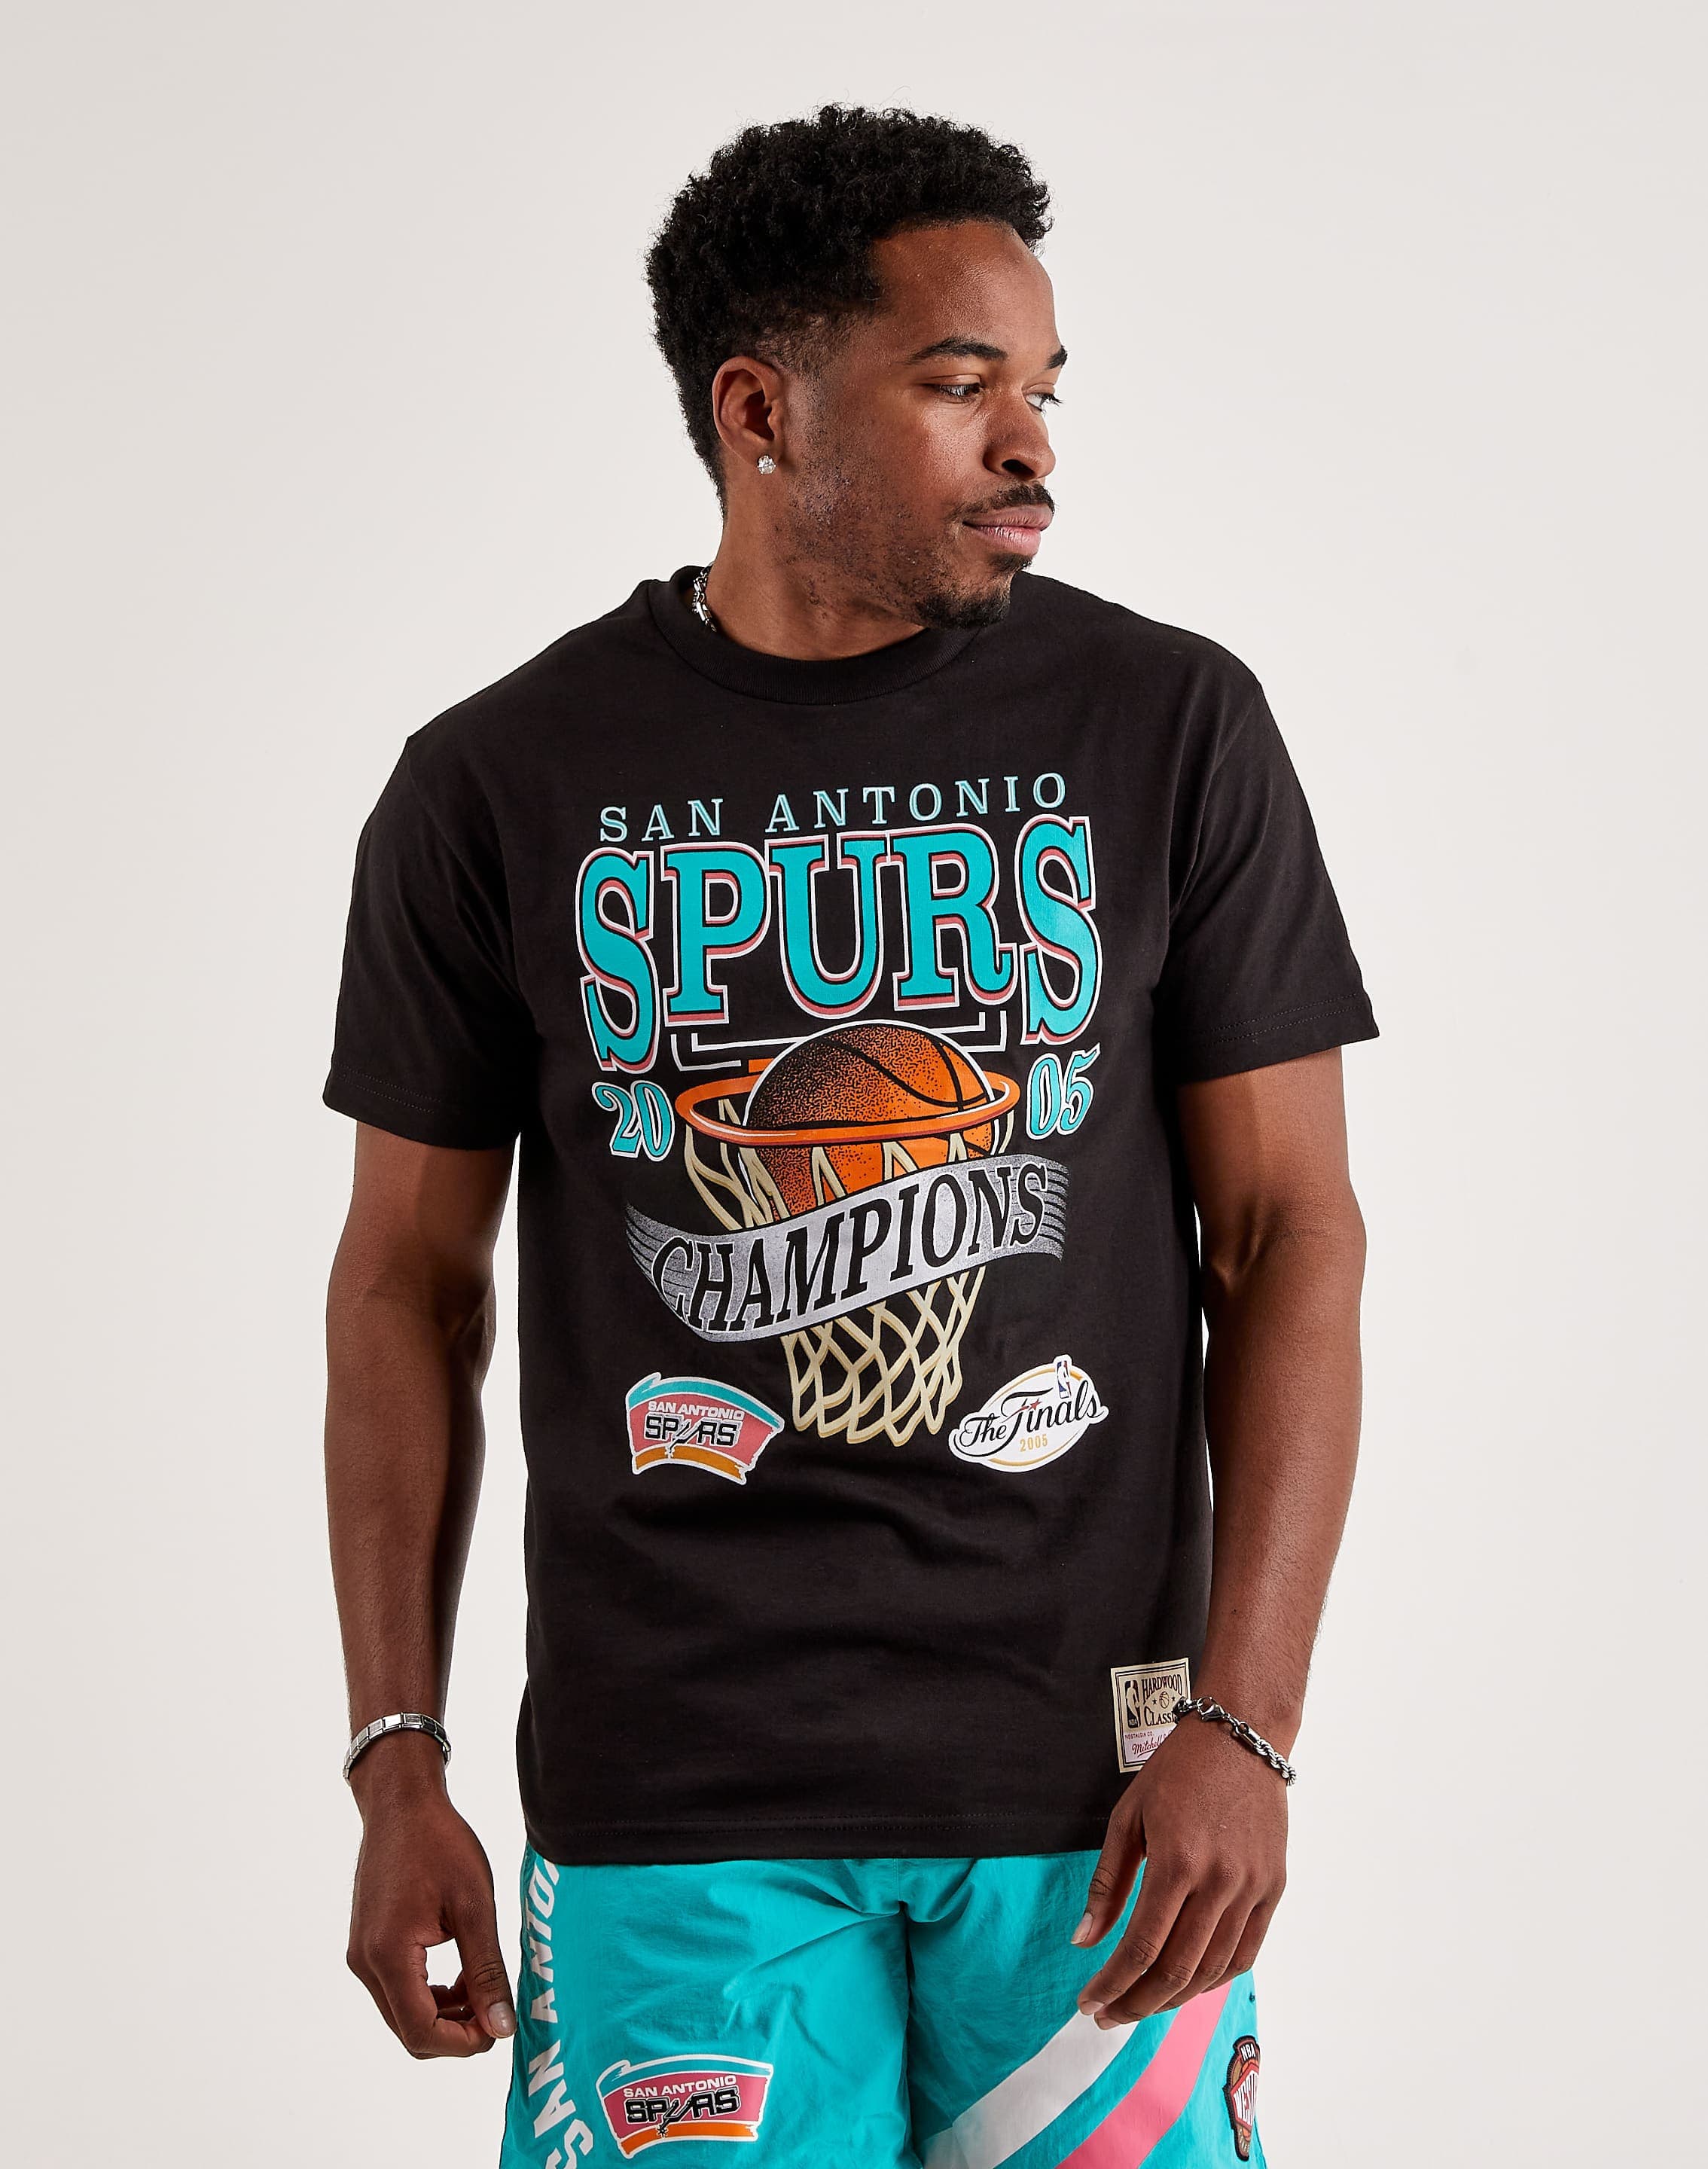 Adidas San Antonio Spurs Championship Ring T-shirt Size XL